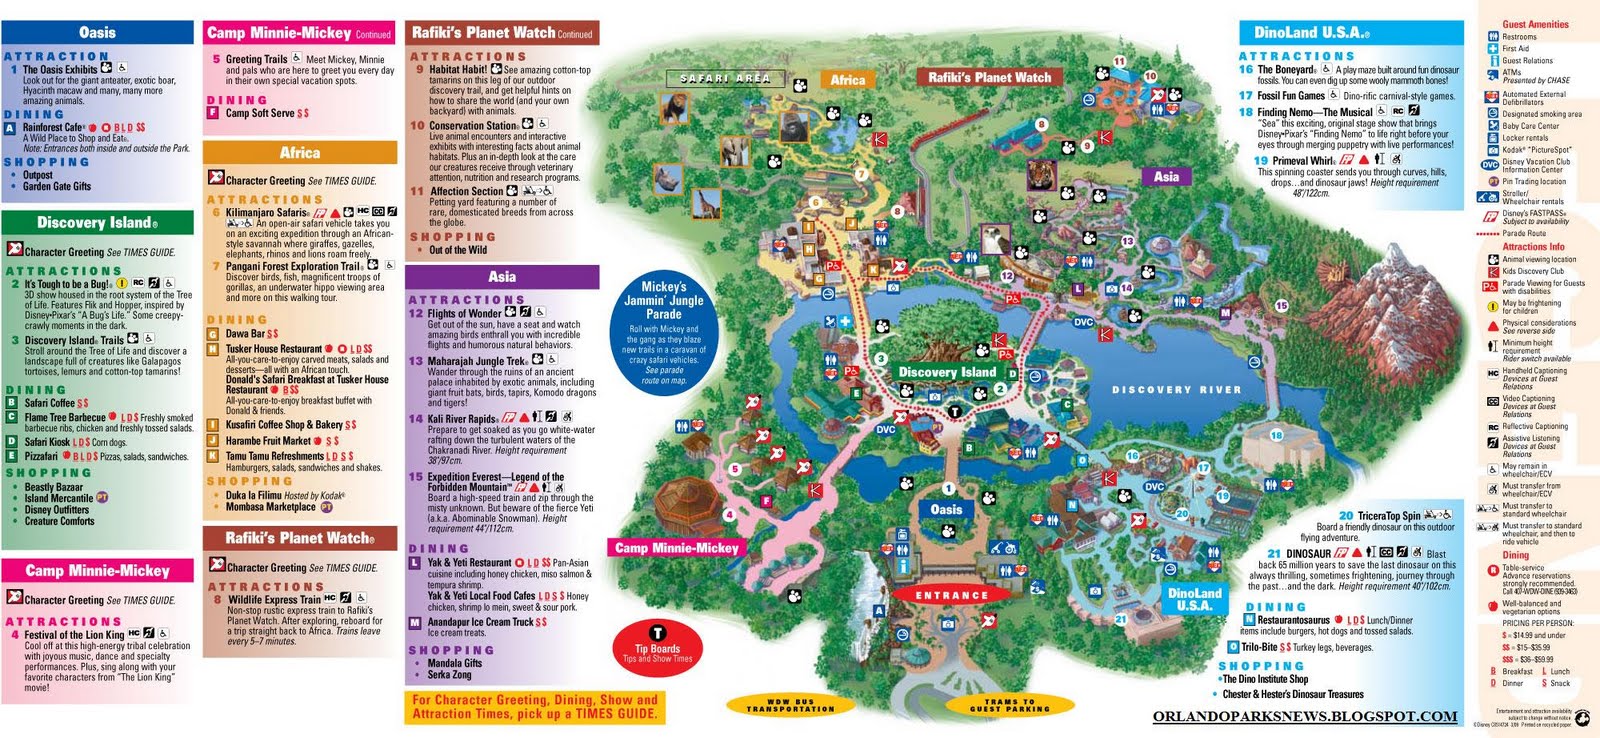 Disney's Animal Kingdom park map - Orlando Theme Park News